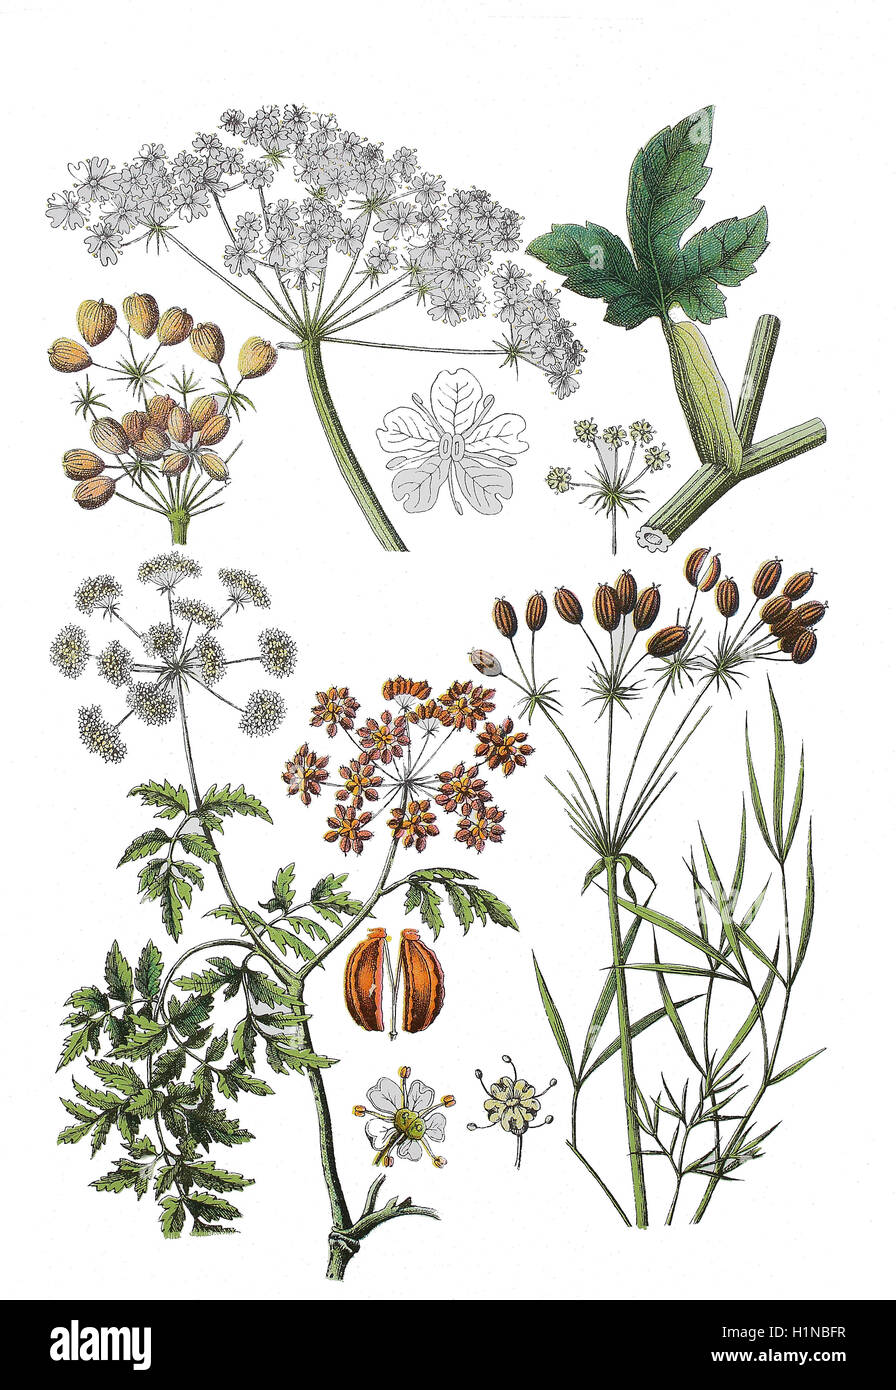 hogweed, common hogweed, Heracleum sphondylium (top left), hog's fennel, Peucedanum officinale (right top und bottem), hemlock or poison hemlock, Conium maculatum (bottem right) Stock Photo